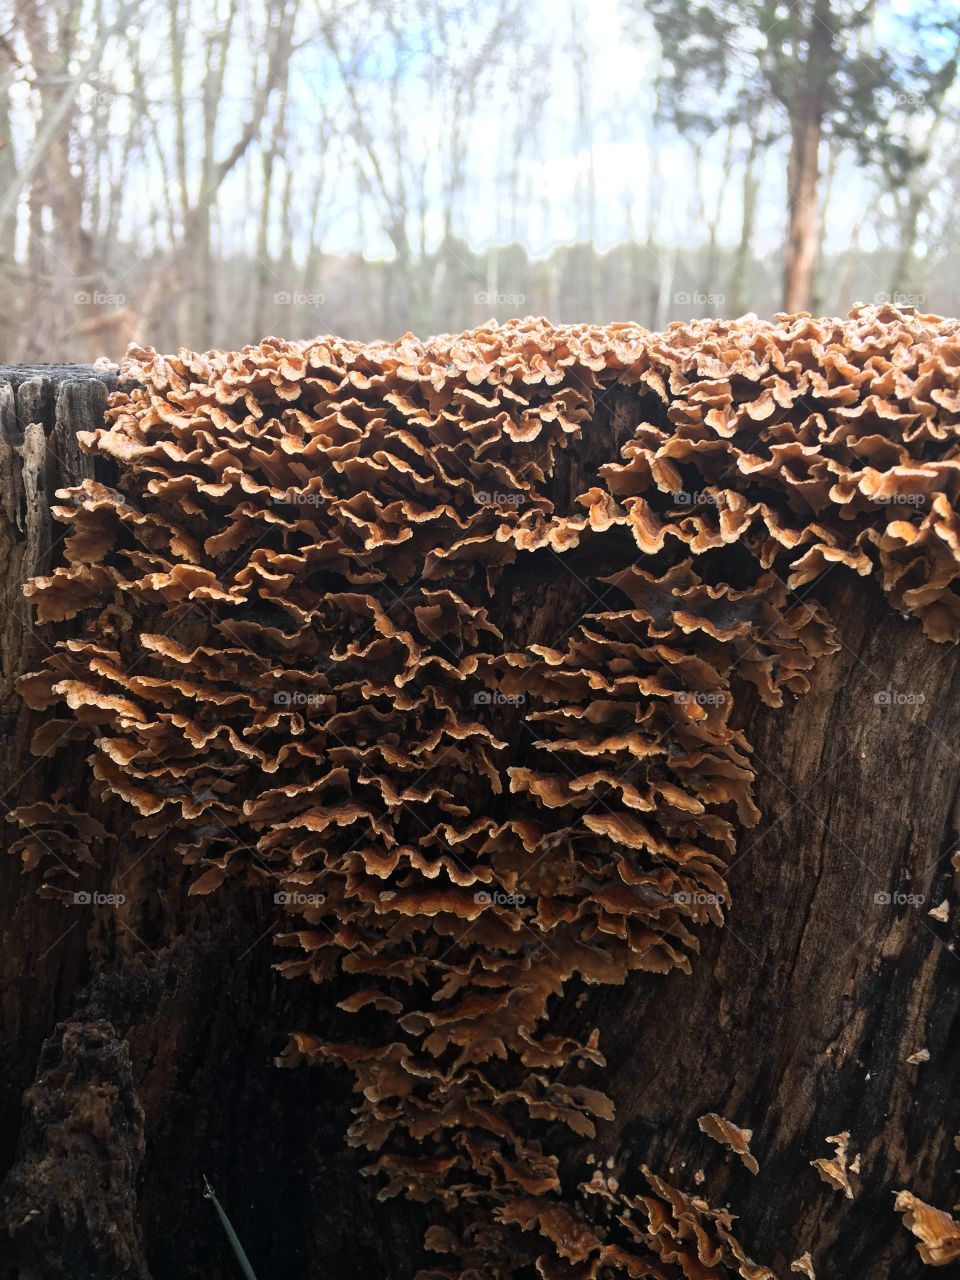 Stump with fungus